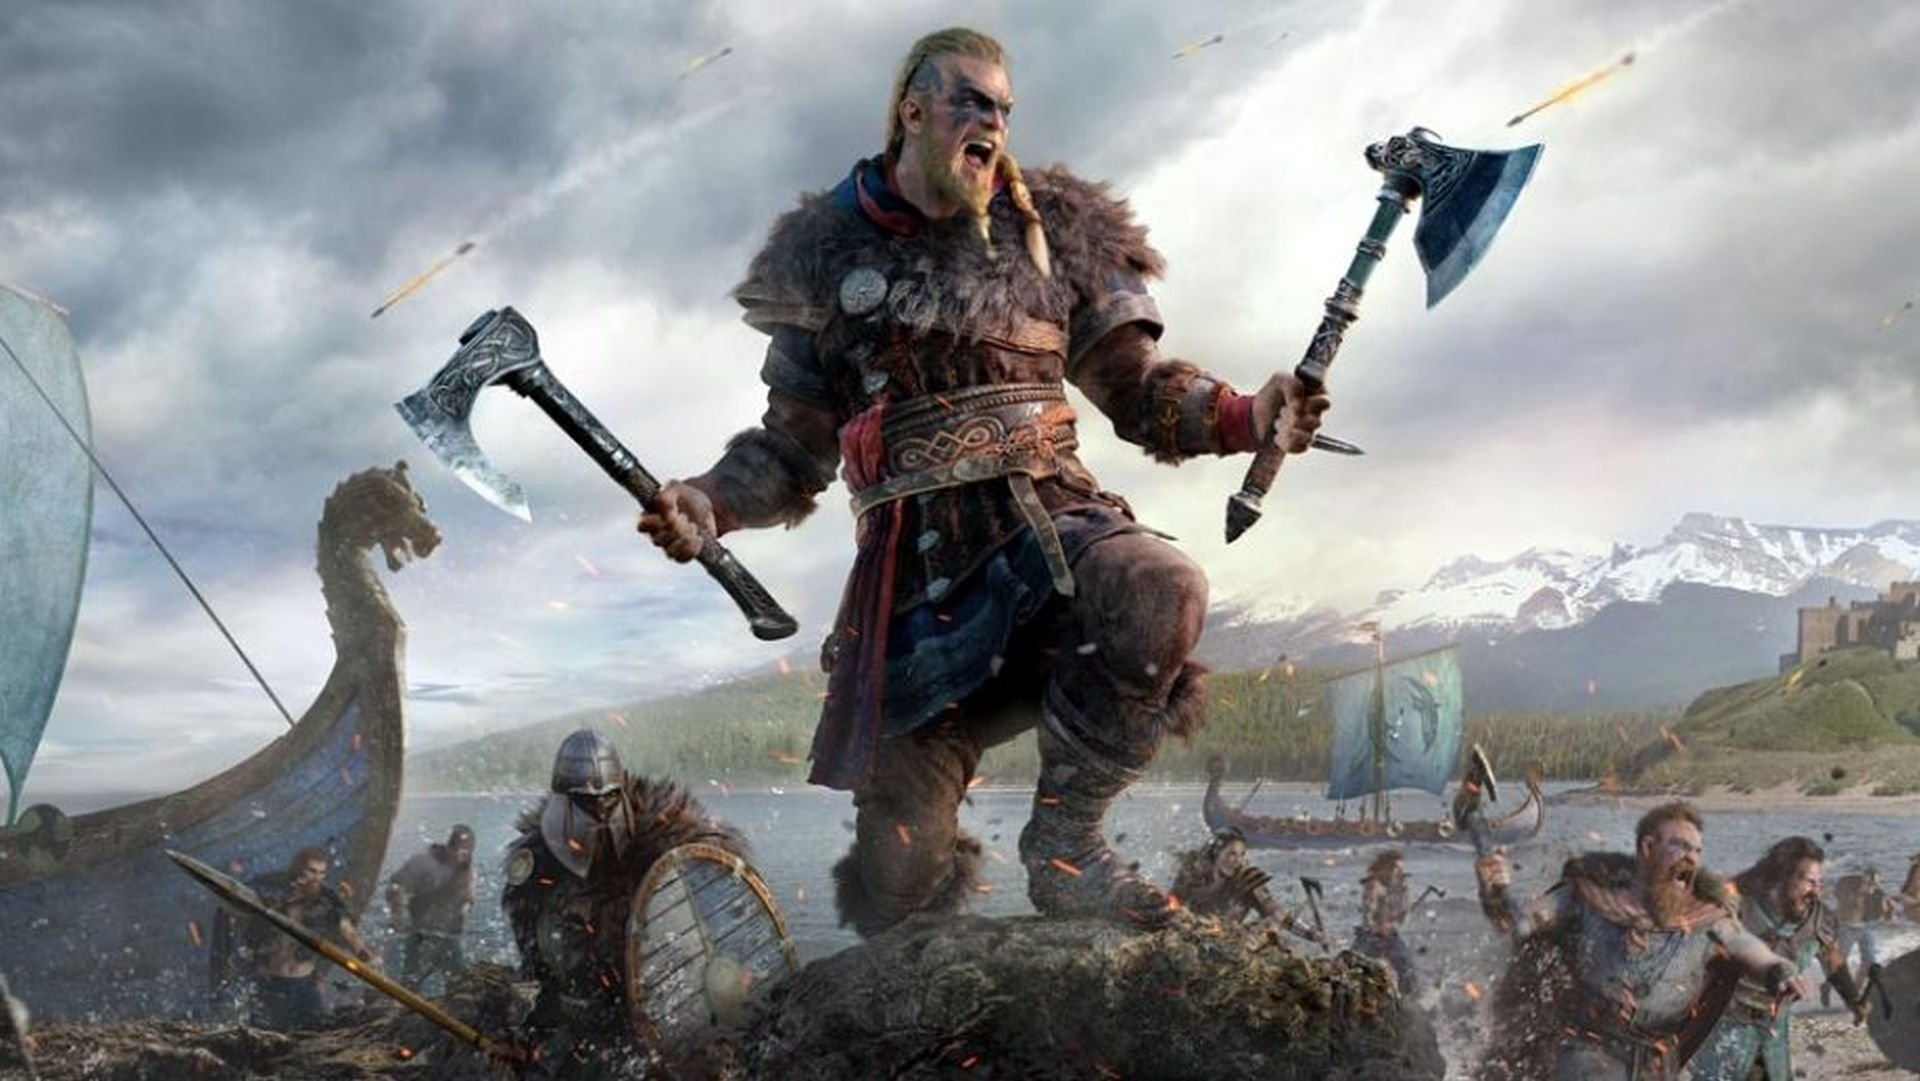 Vikings  Vikings personagens, Wallpapers de filmes, Guerreiro viking